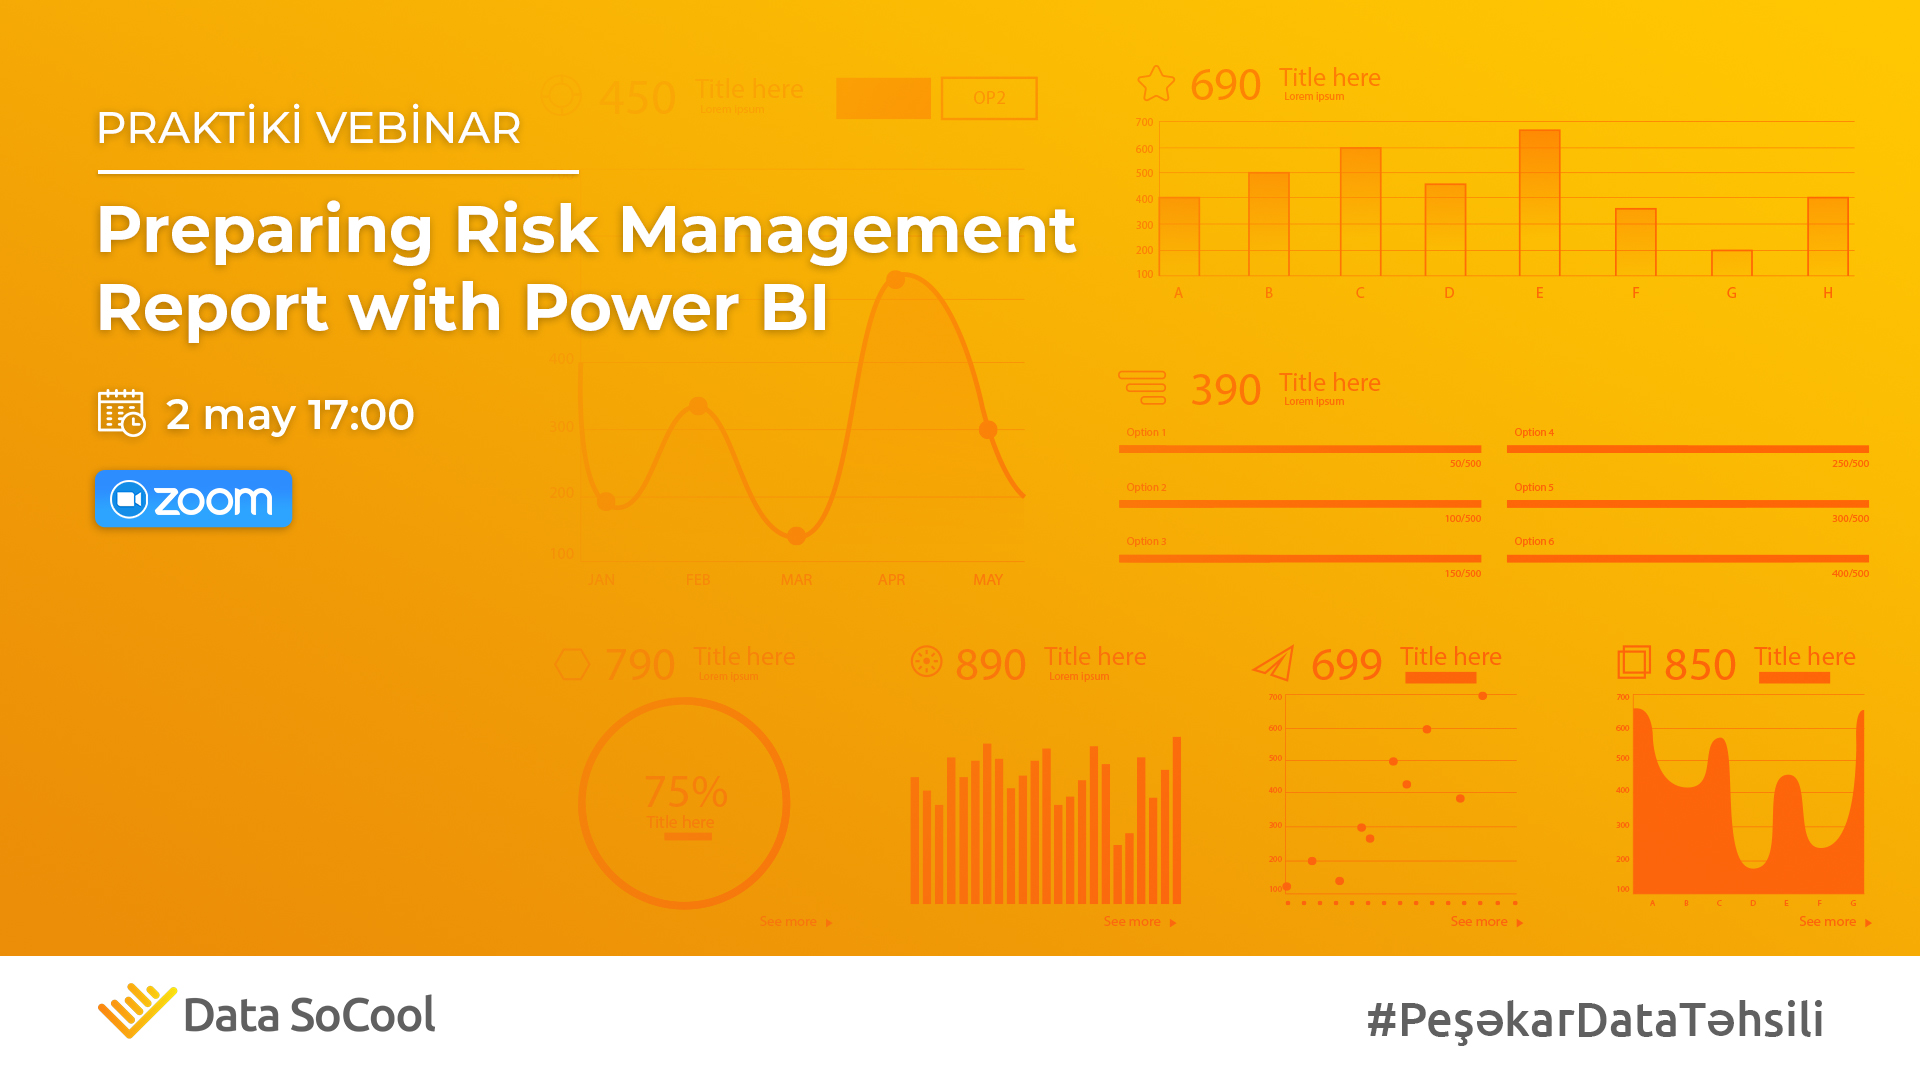 Praktiki Vebinar: Preparing Risk Management Report with Power BI